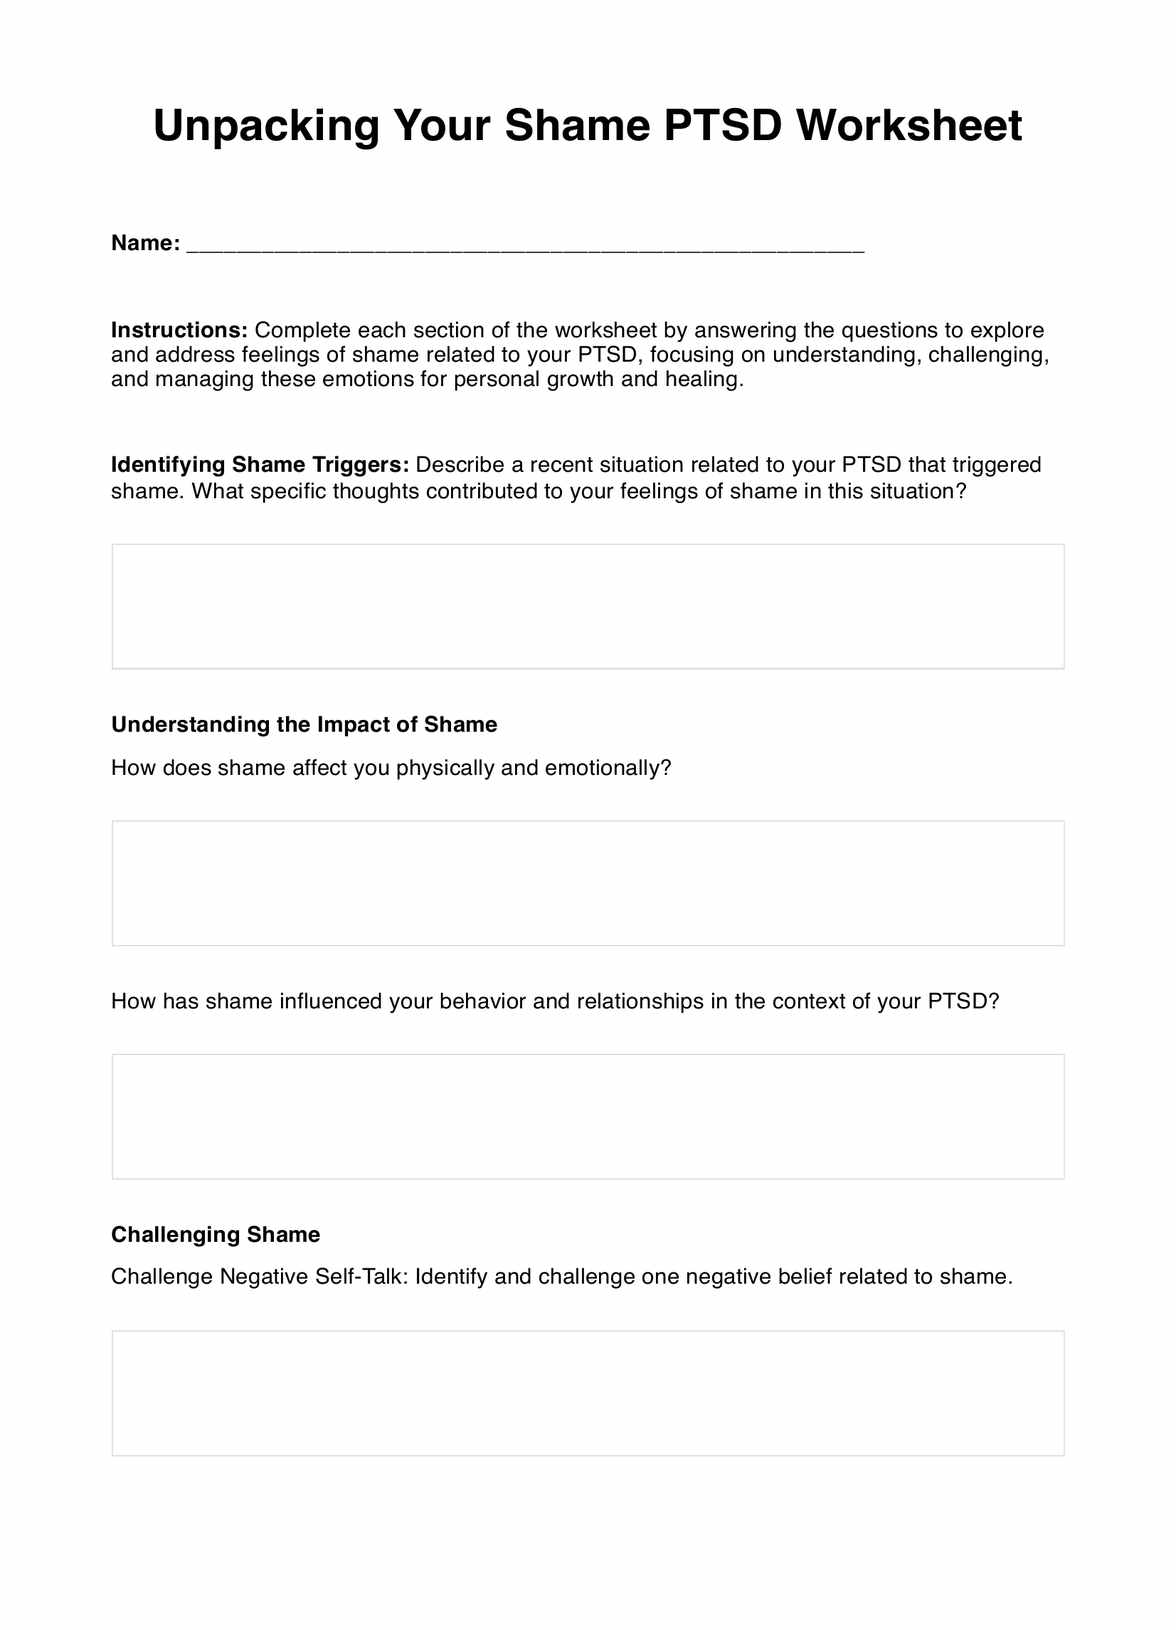 Unpacking Your Shame PTSD Worksheet PDF Example